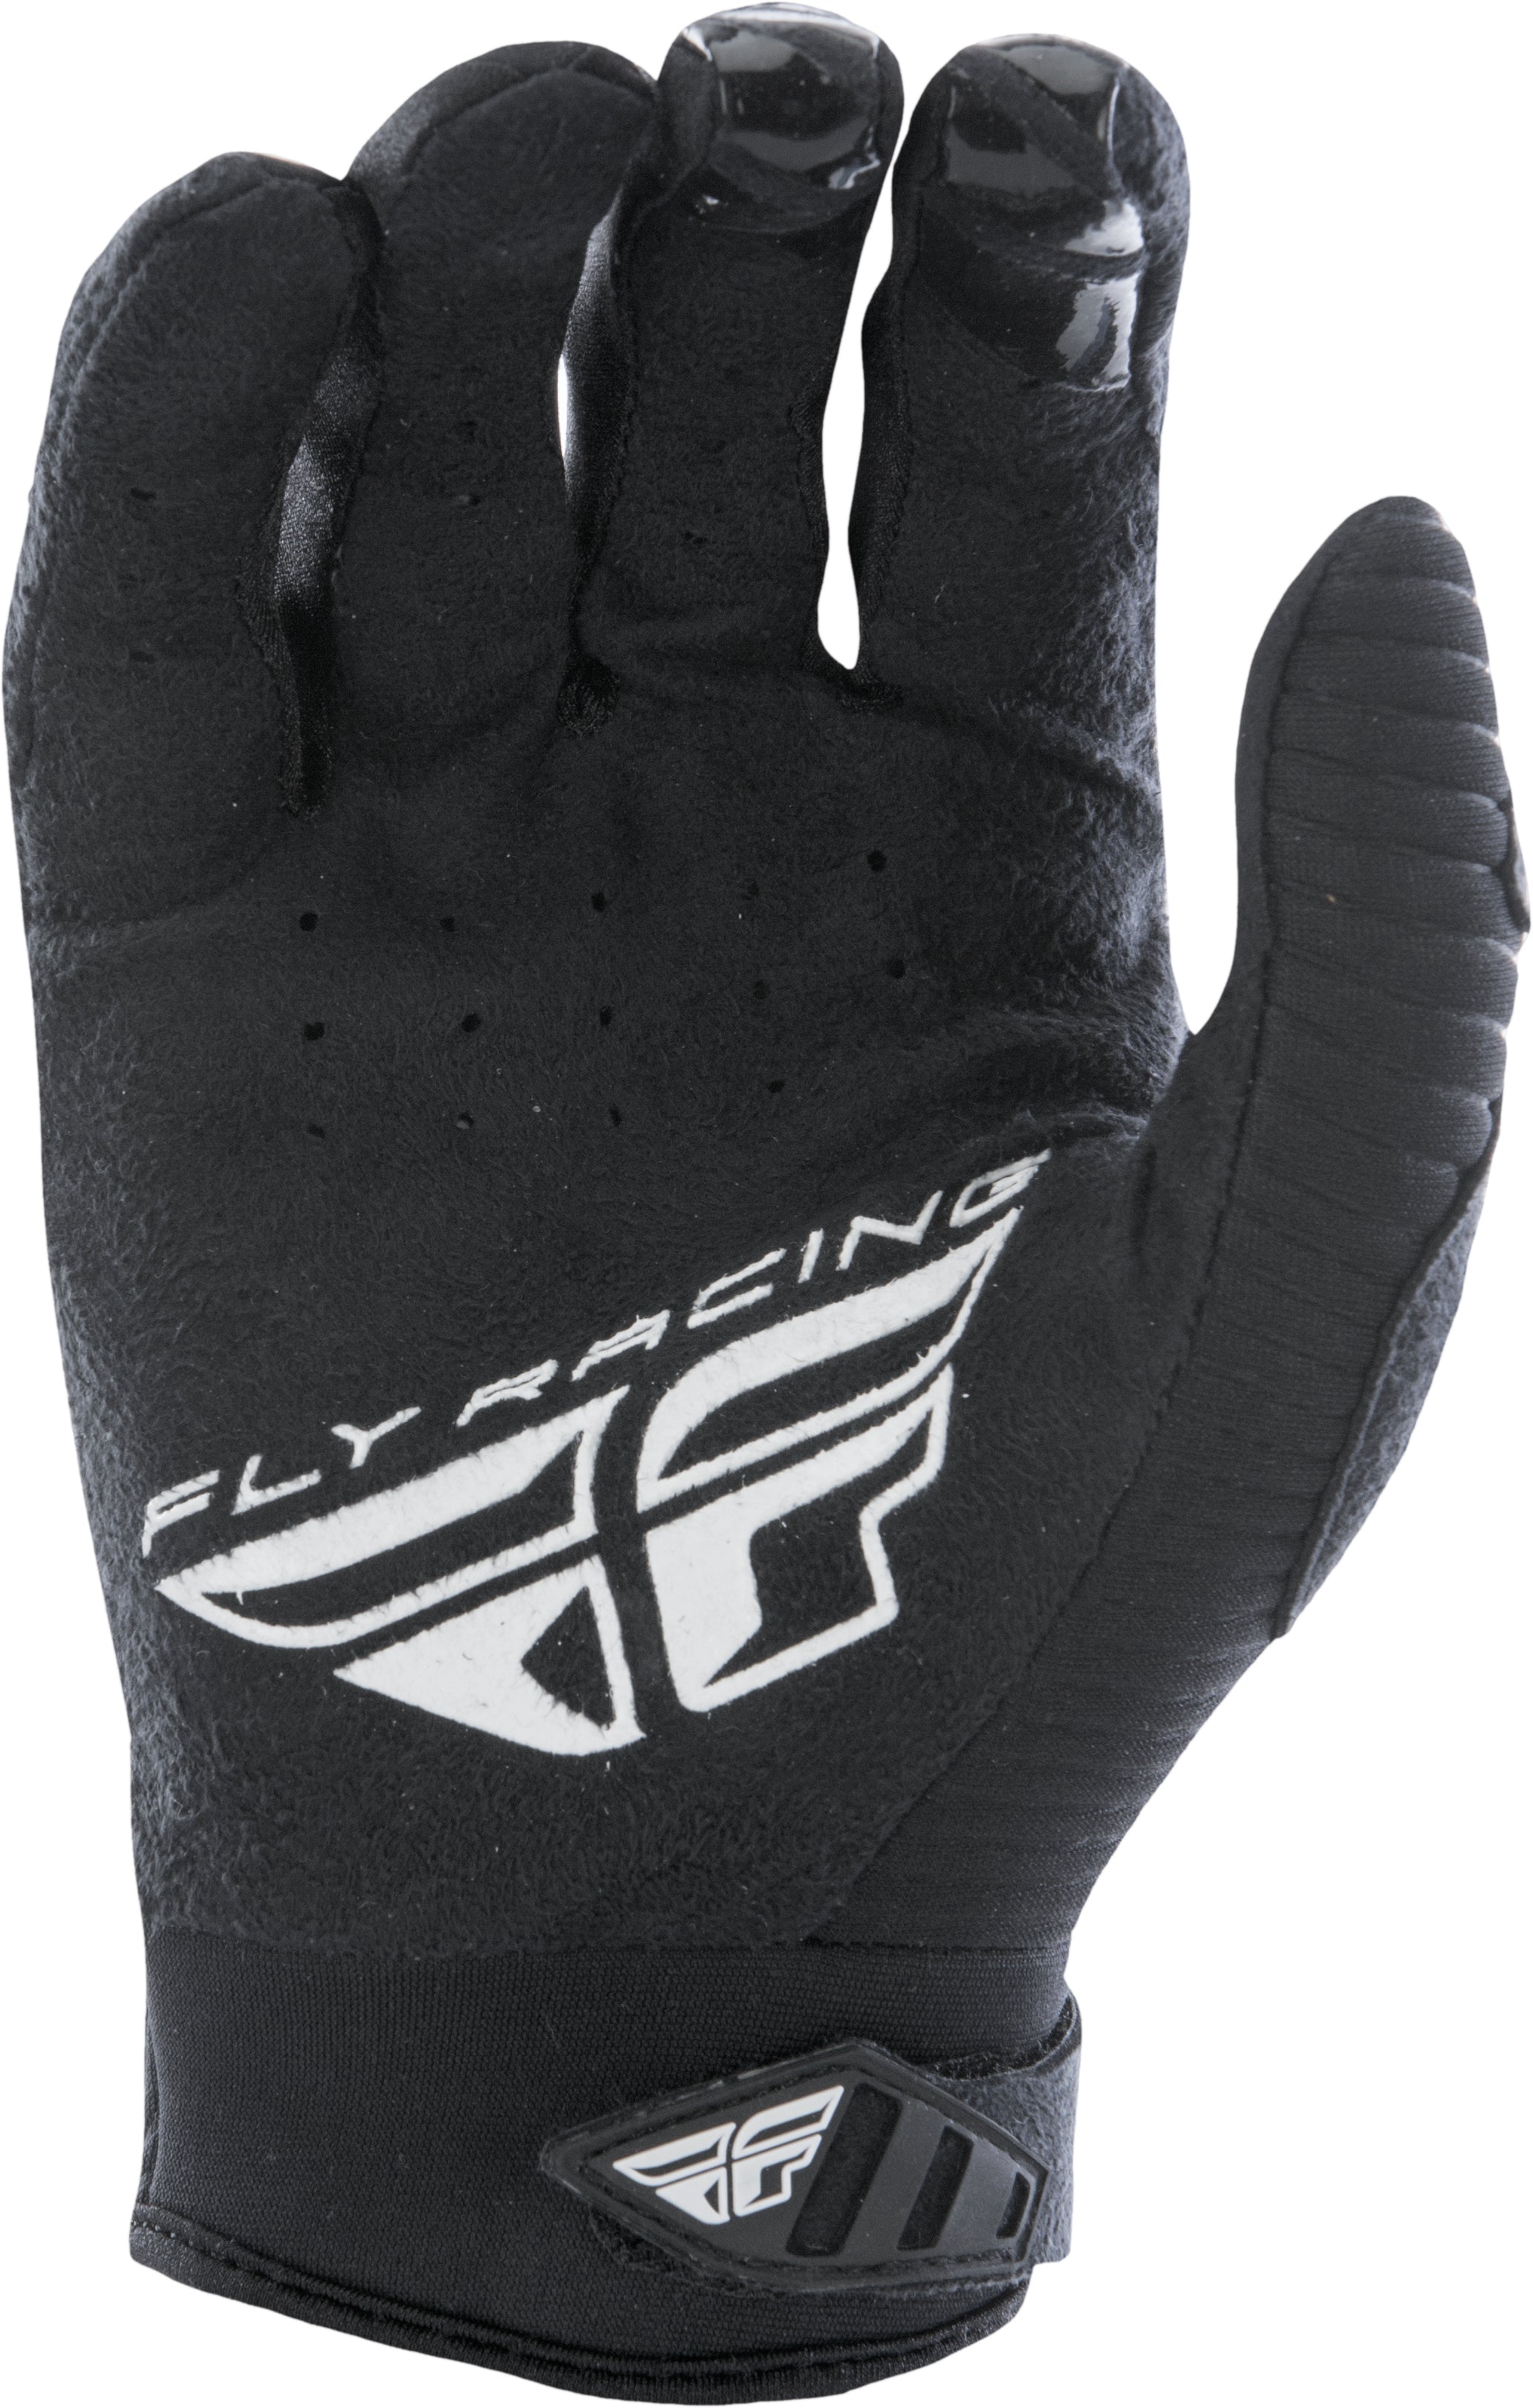 Patrol Xc Lite Gloves Black Sz 11